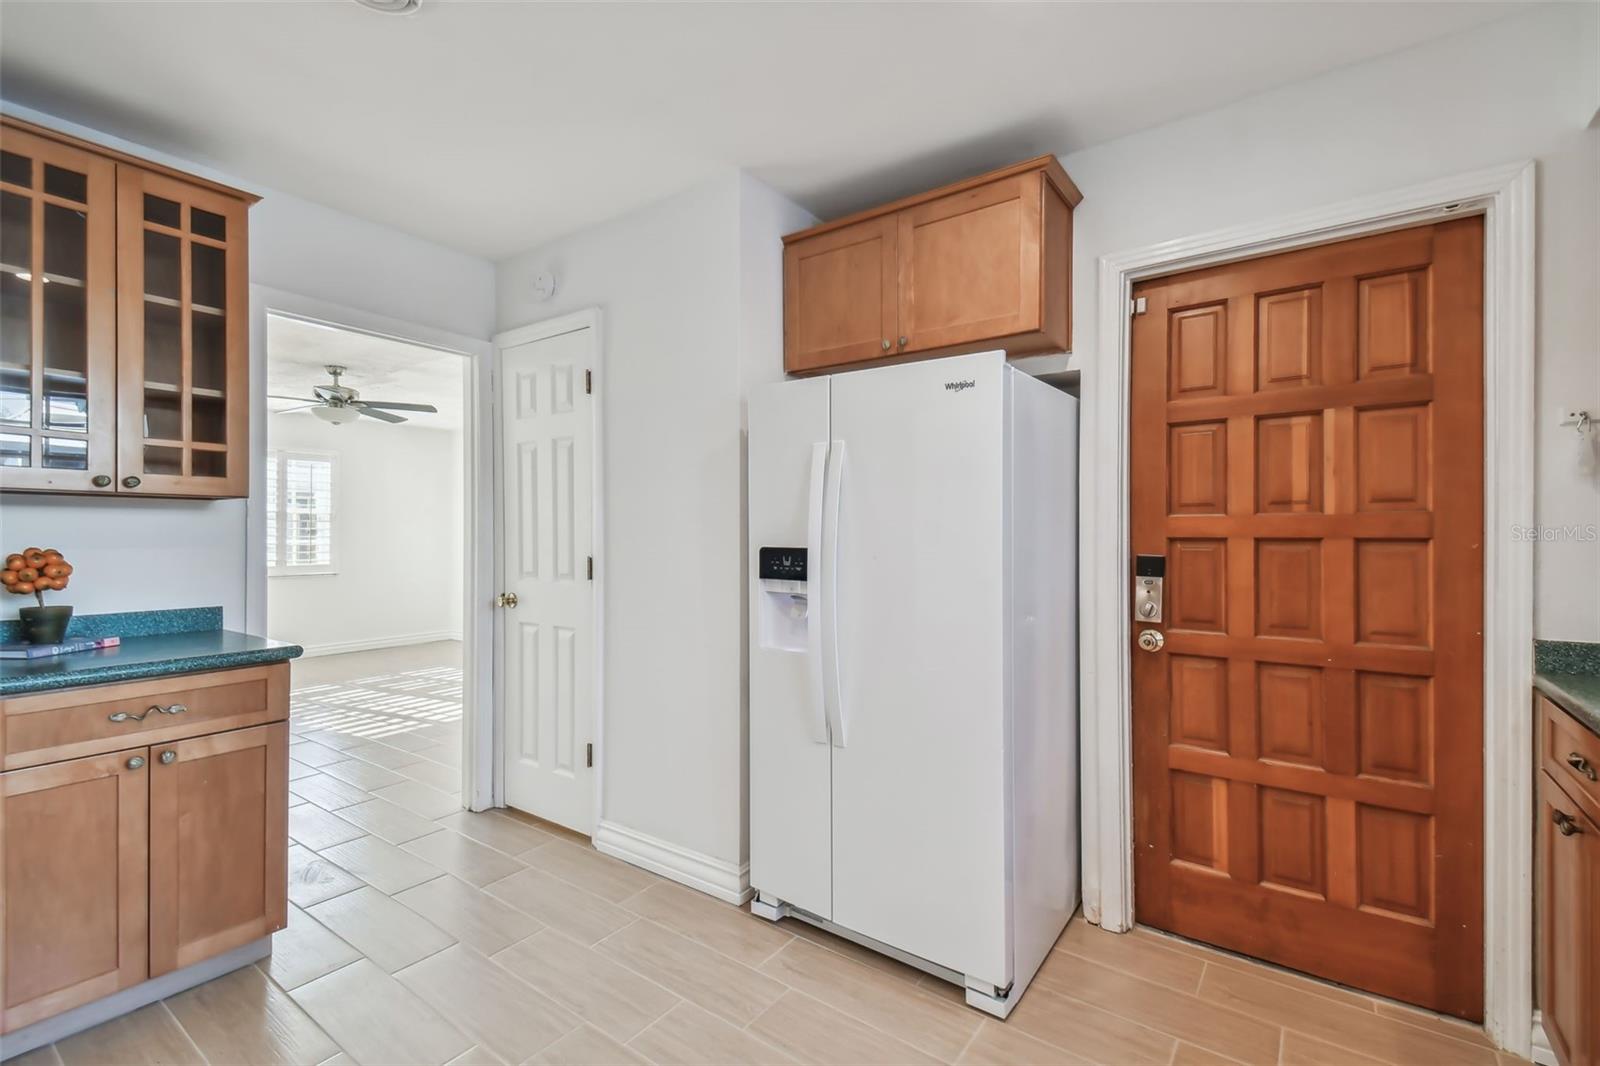 Kitchen has newer appliances and door to garage